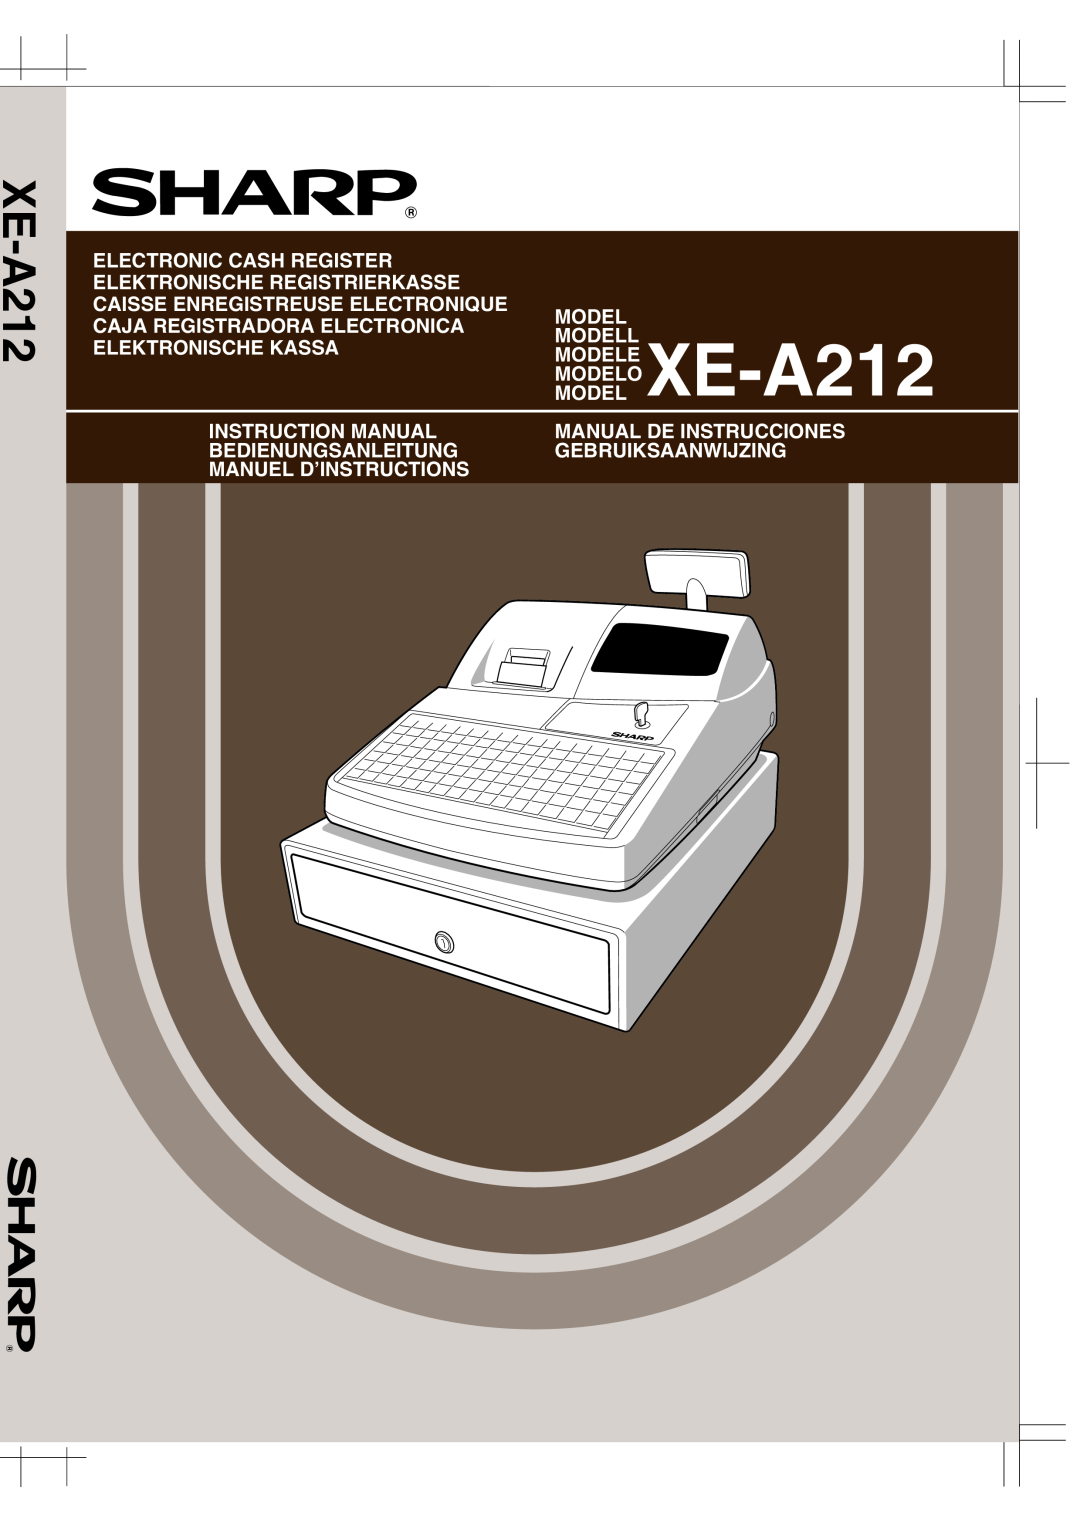 Sharp XE-A212 instruction manual 